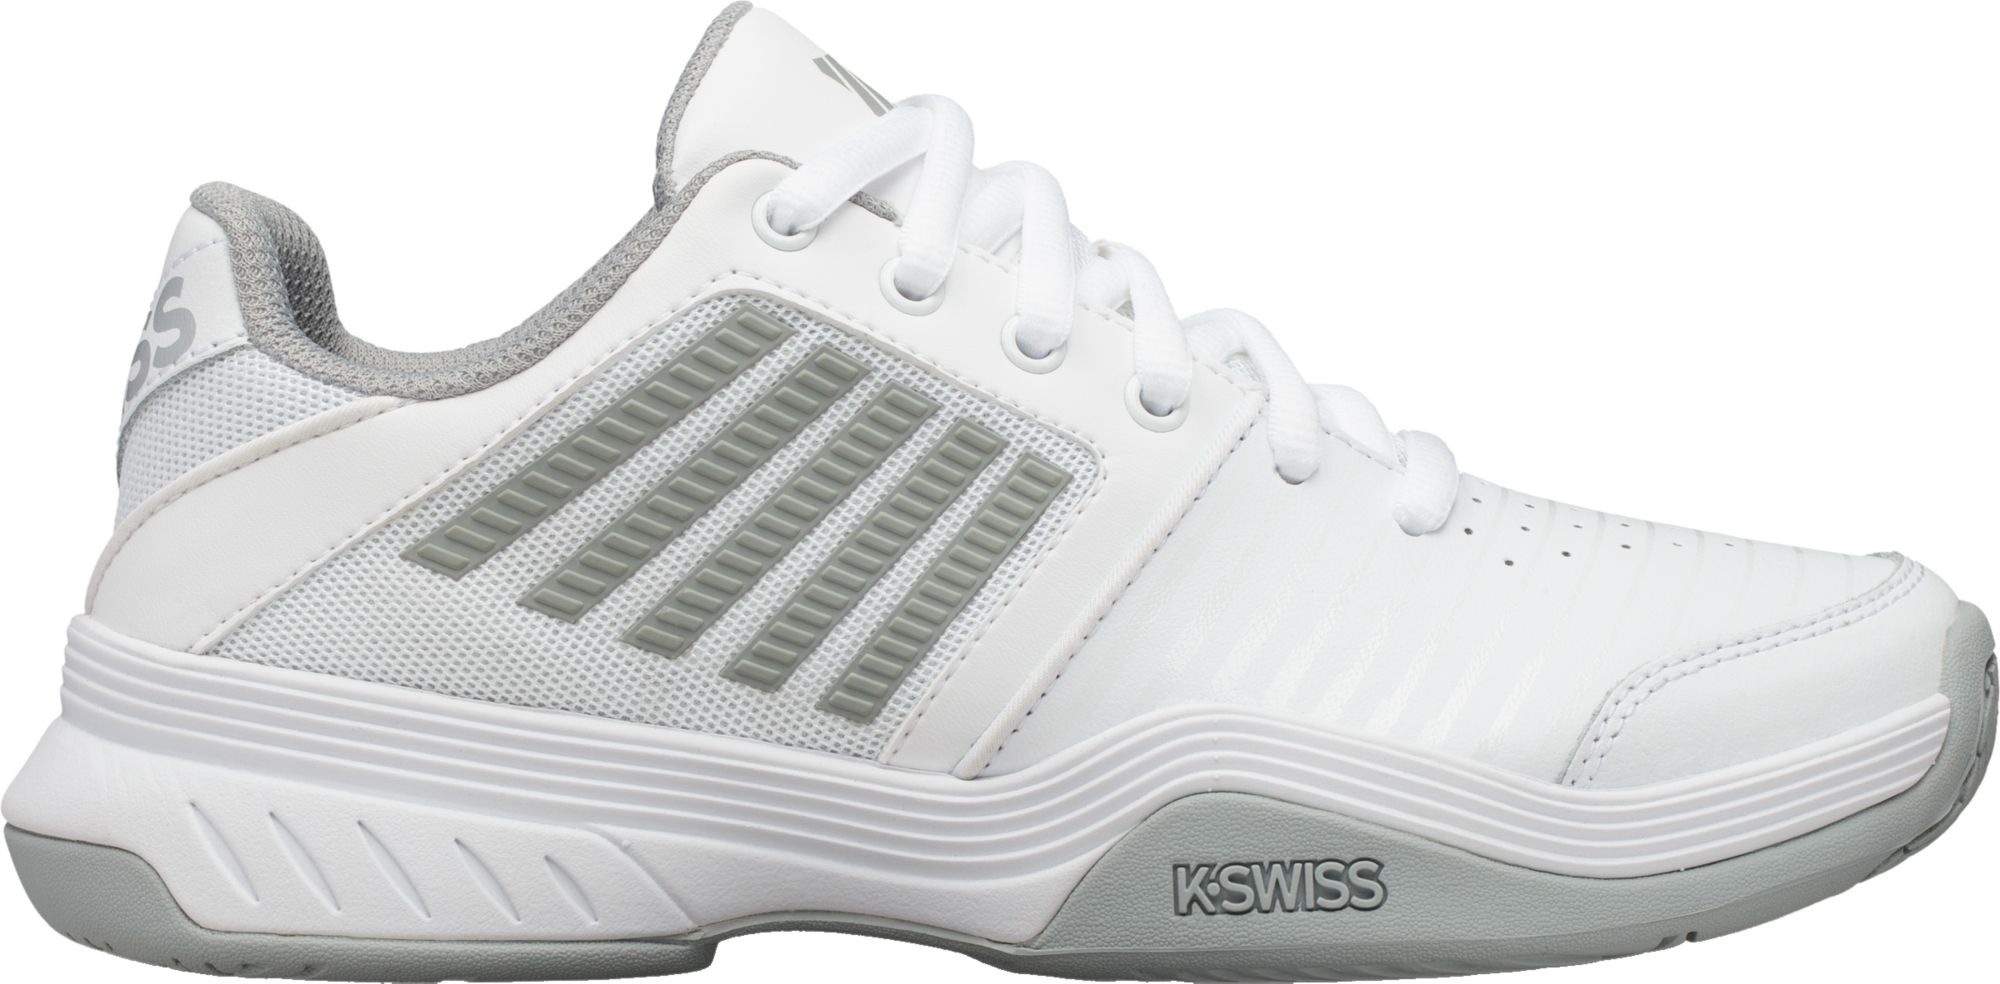 kswiss tennis court shoes